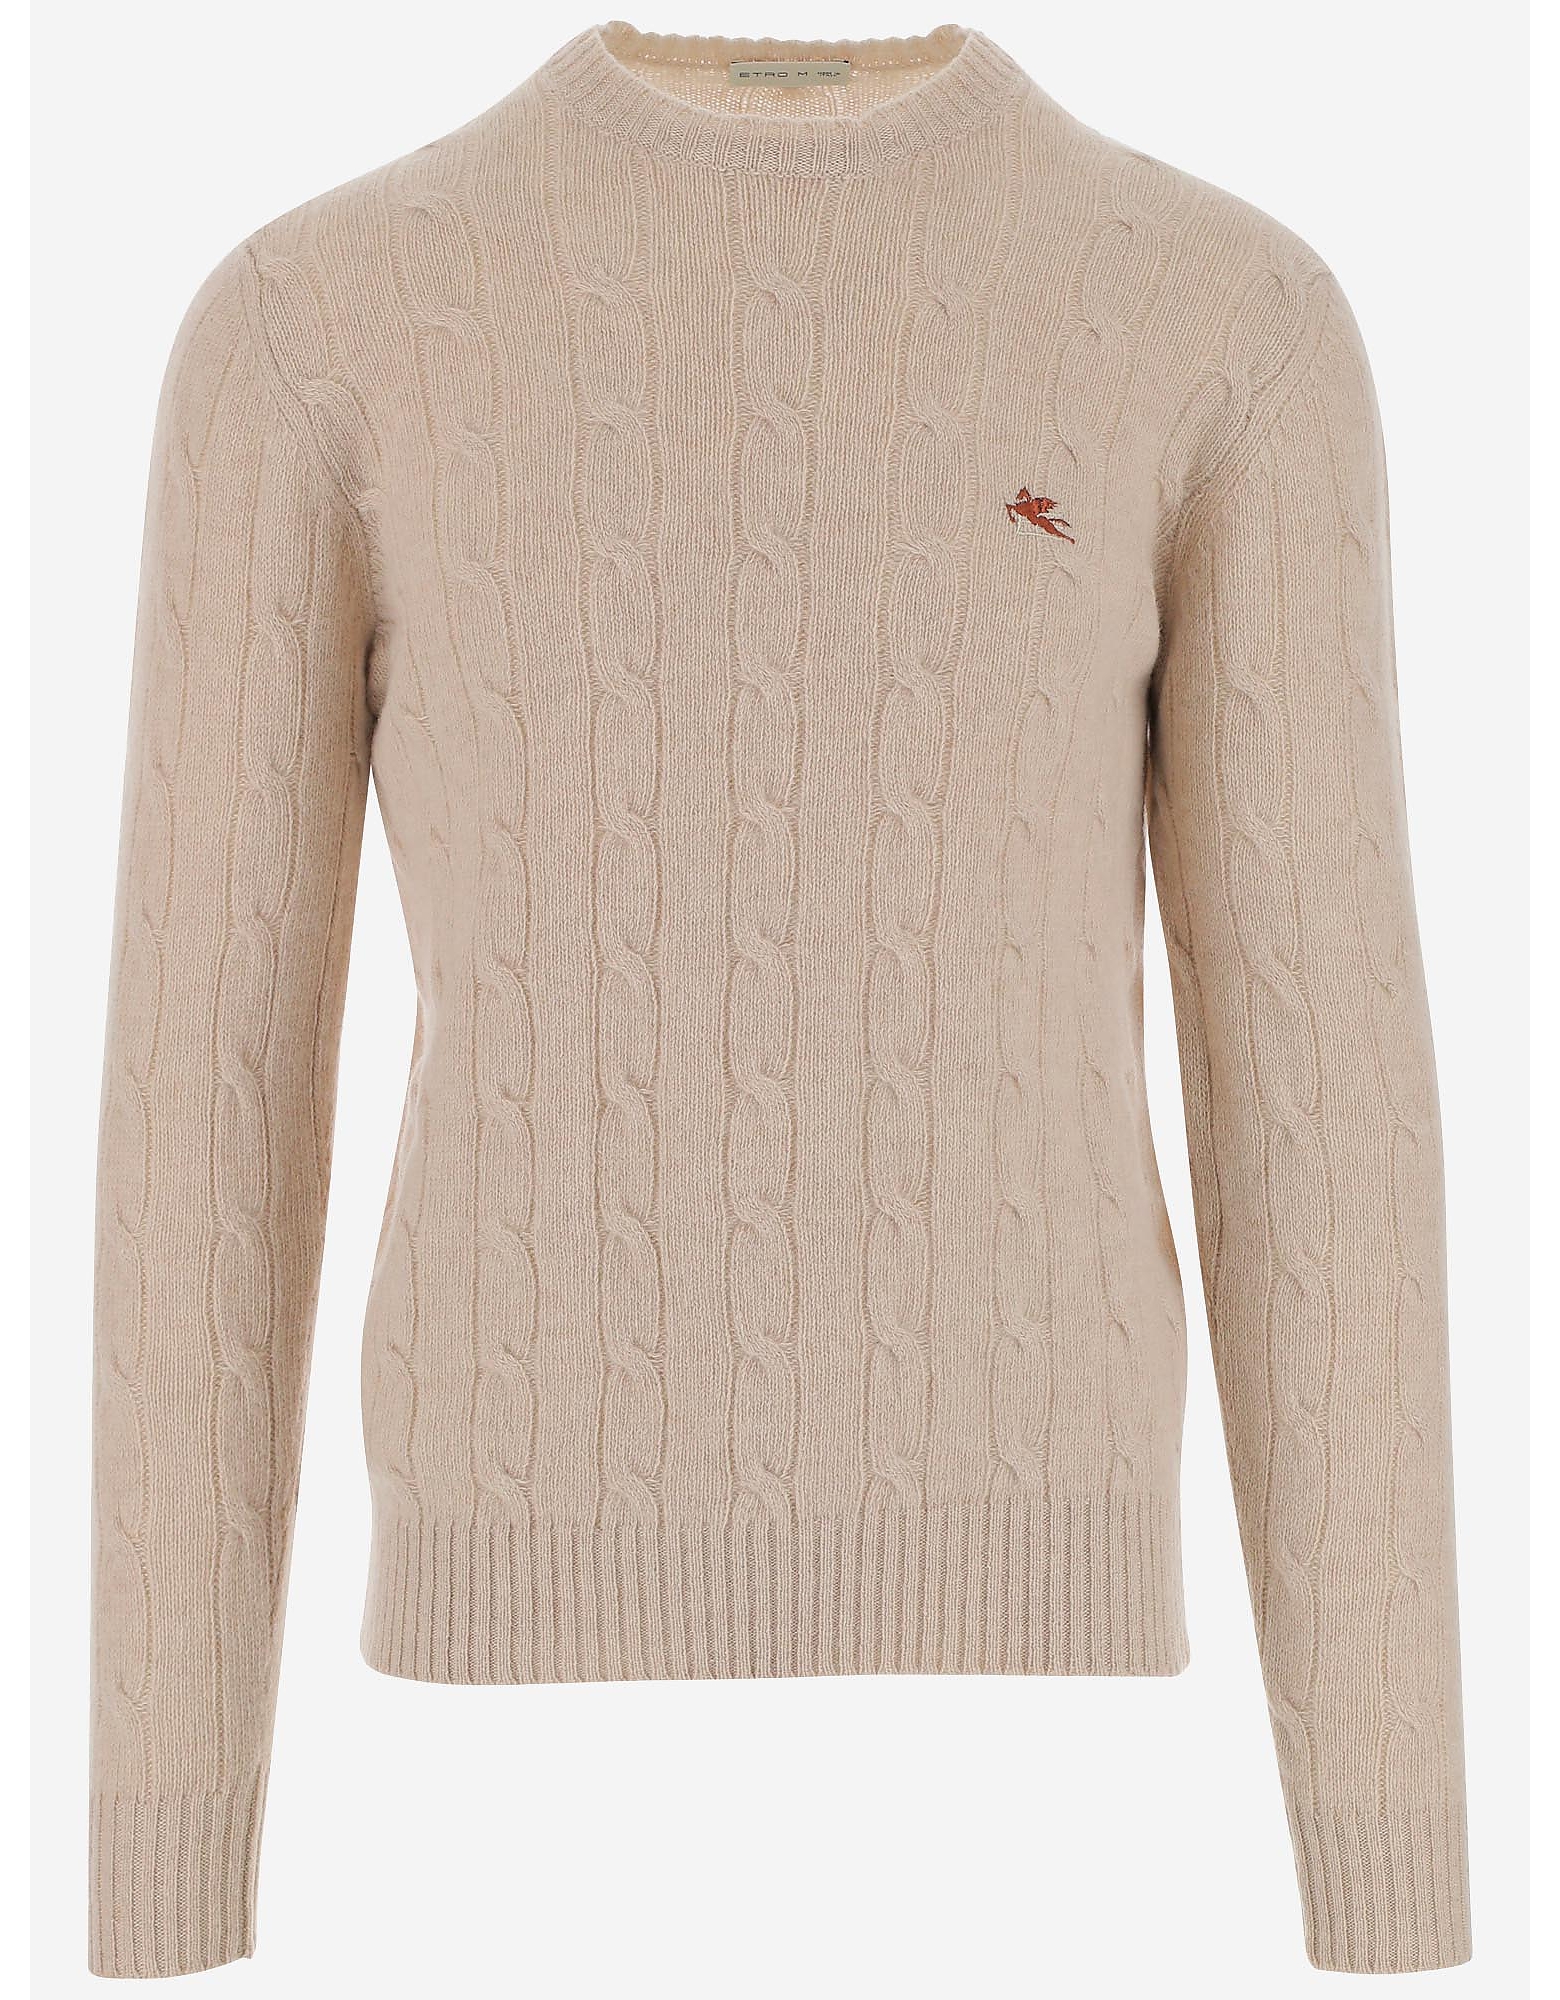 Etro Designer Knitwear, Men's Crewneck Sweater